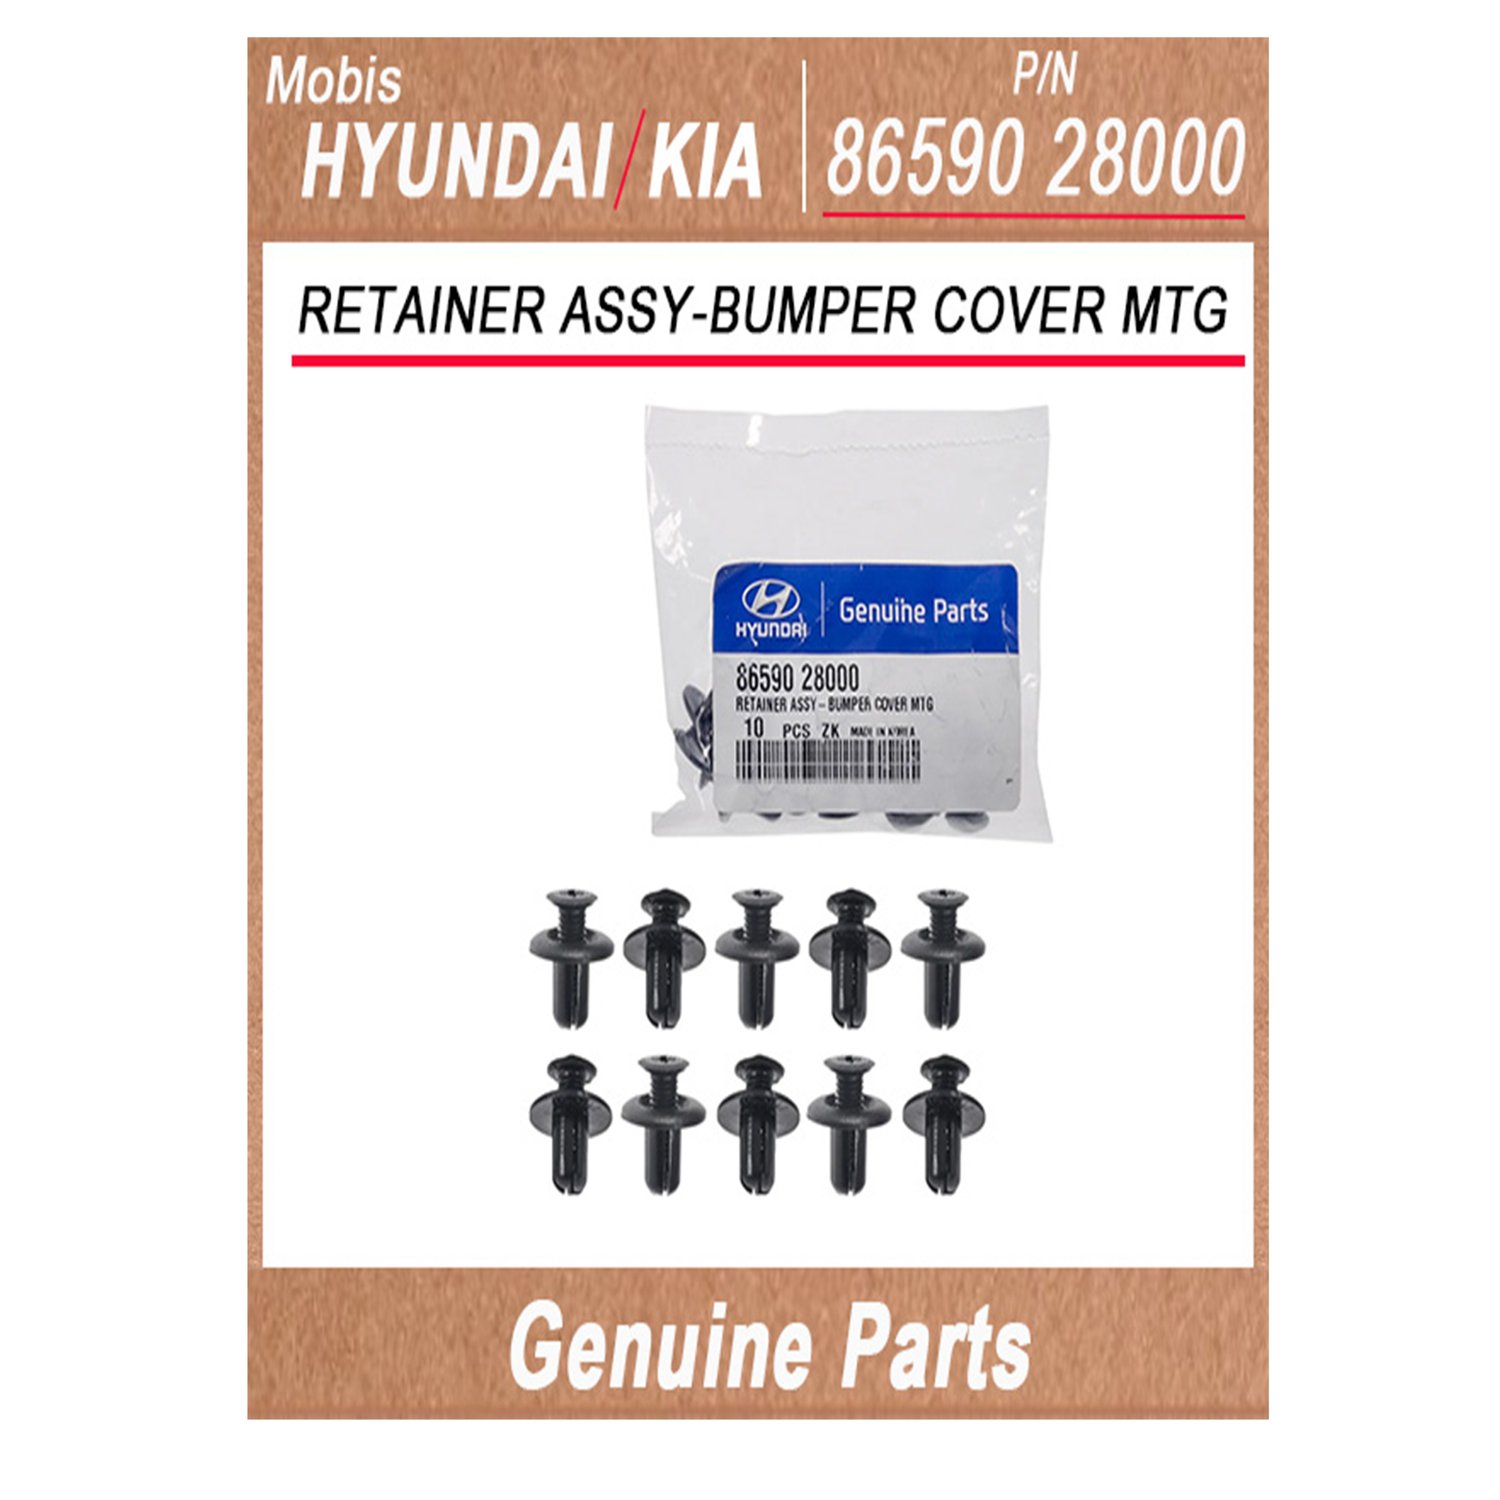 8659028000 _ RETAINER ASSY_BUMPER COVER MTG _ Genuine Korean Automotive Spare Parts _ Hyundai Kia _M